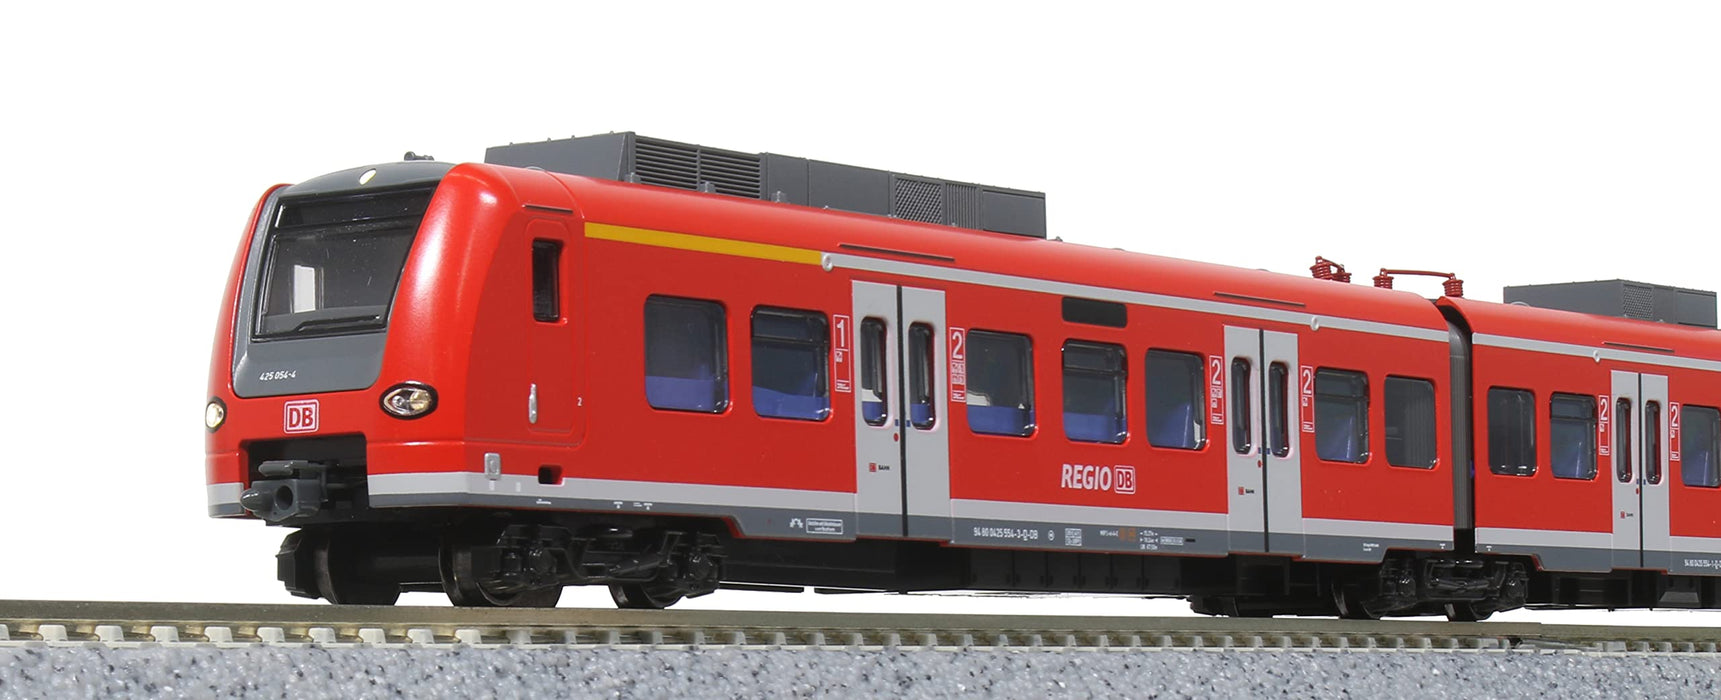 Kato N Gauge 4-Car Set Db Regio Suburban Train Model 10-1716 Railway